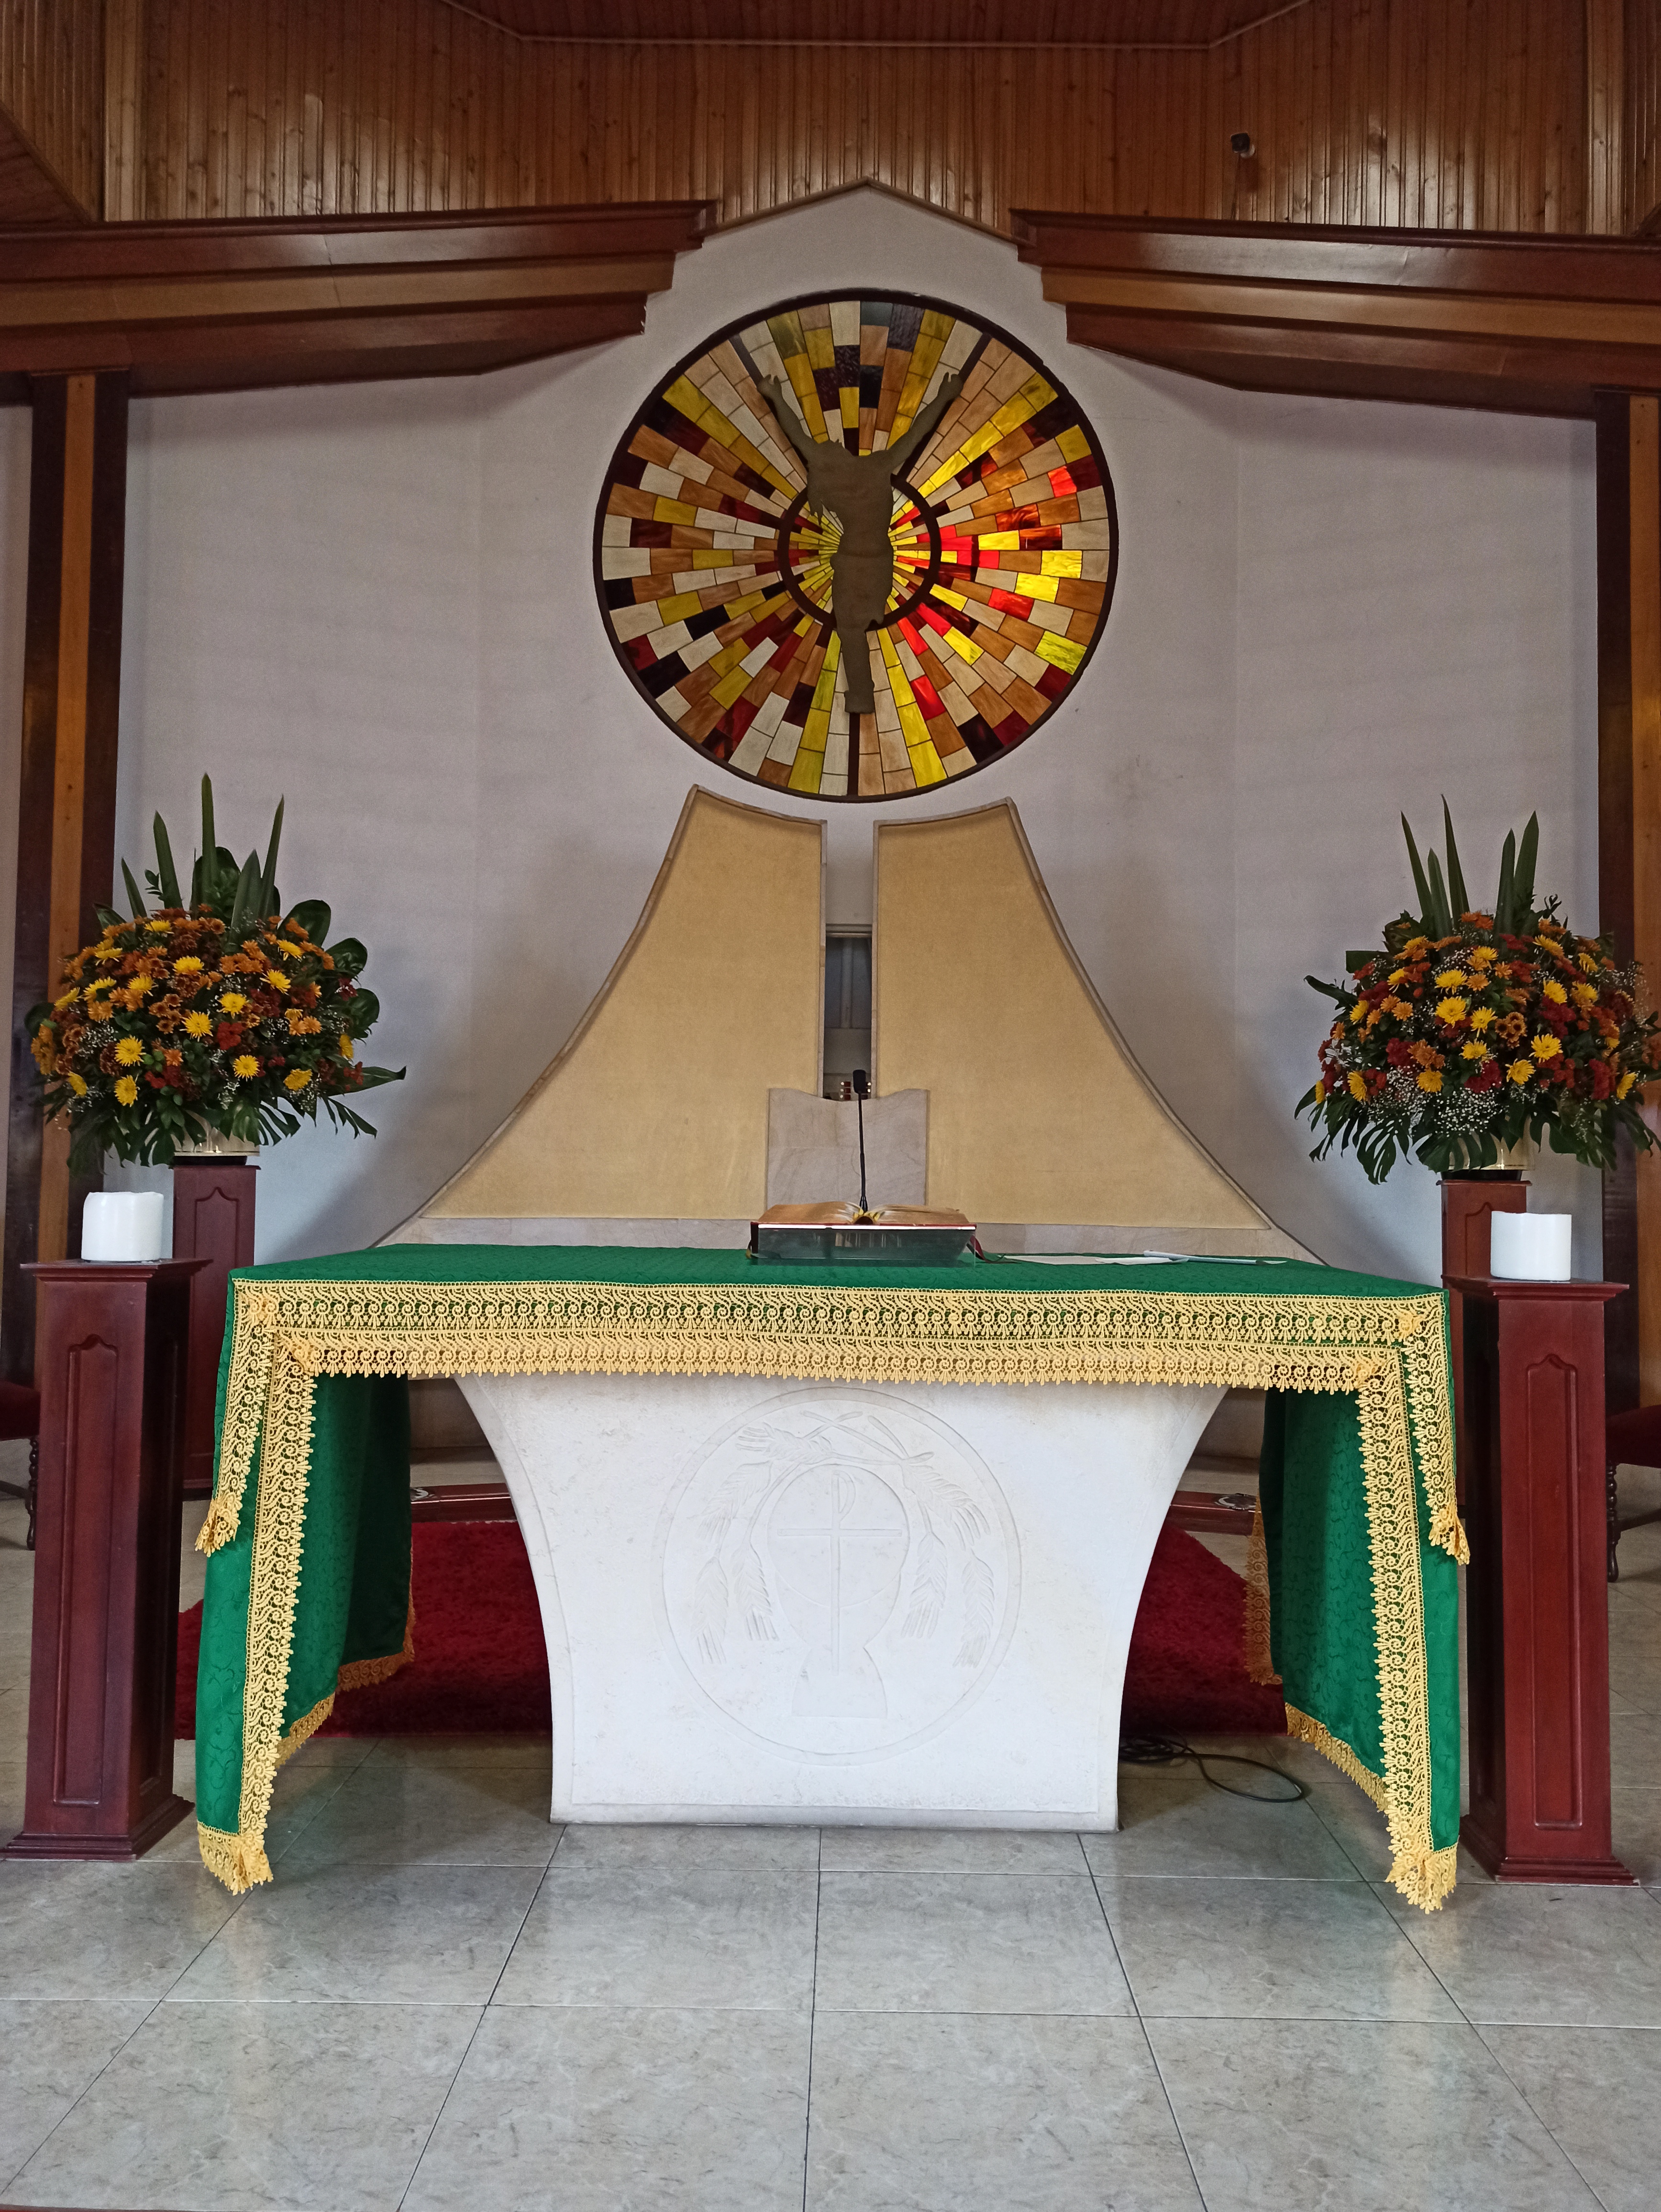 Altar